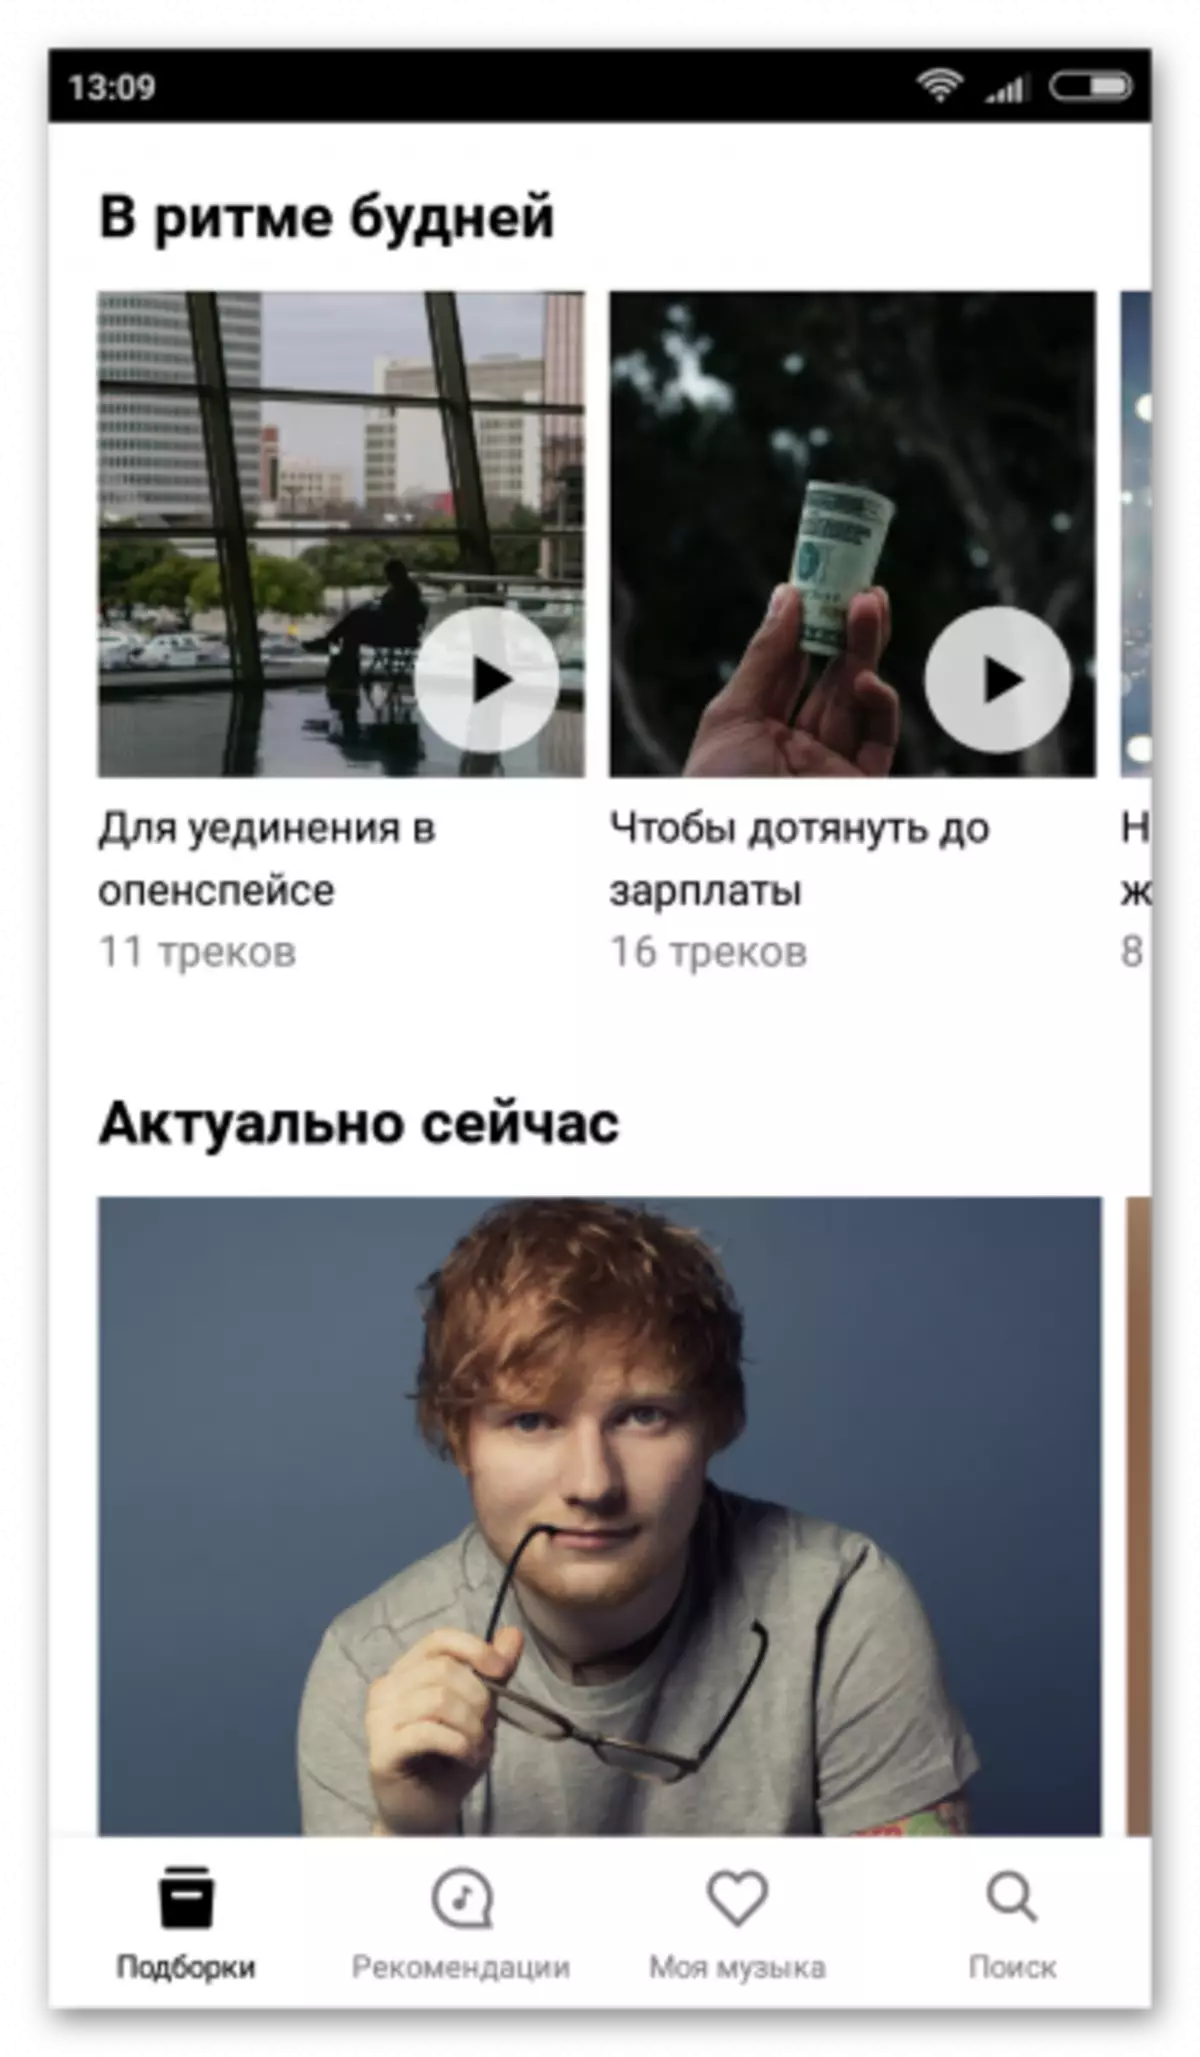 Yandex.music ar Android